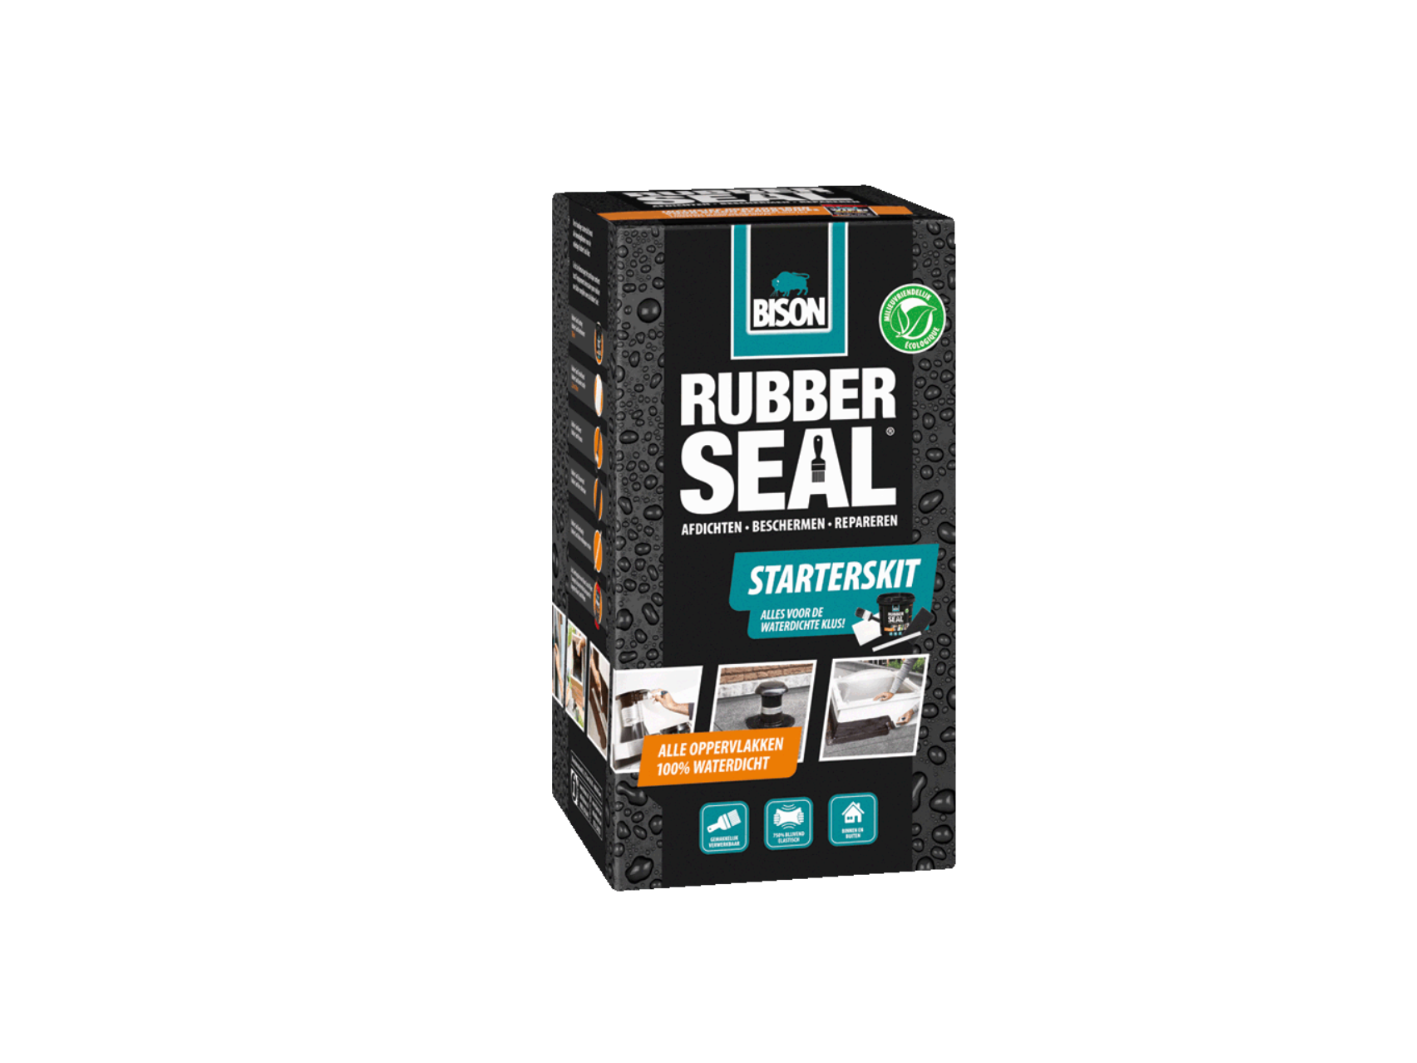 Bison | Rubber Seal Starterskit